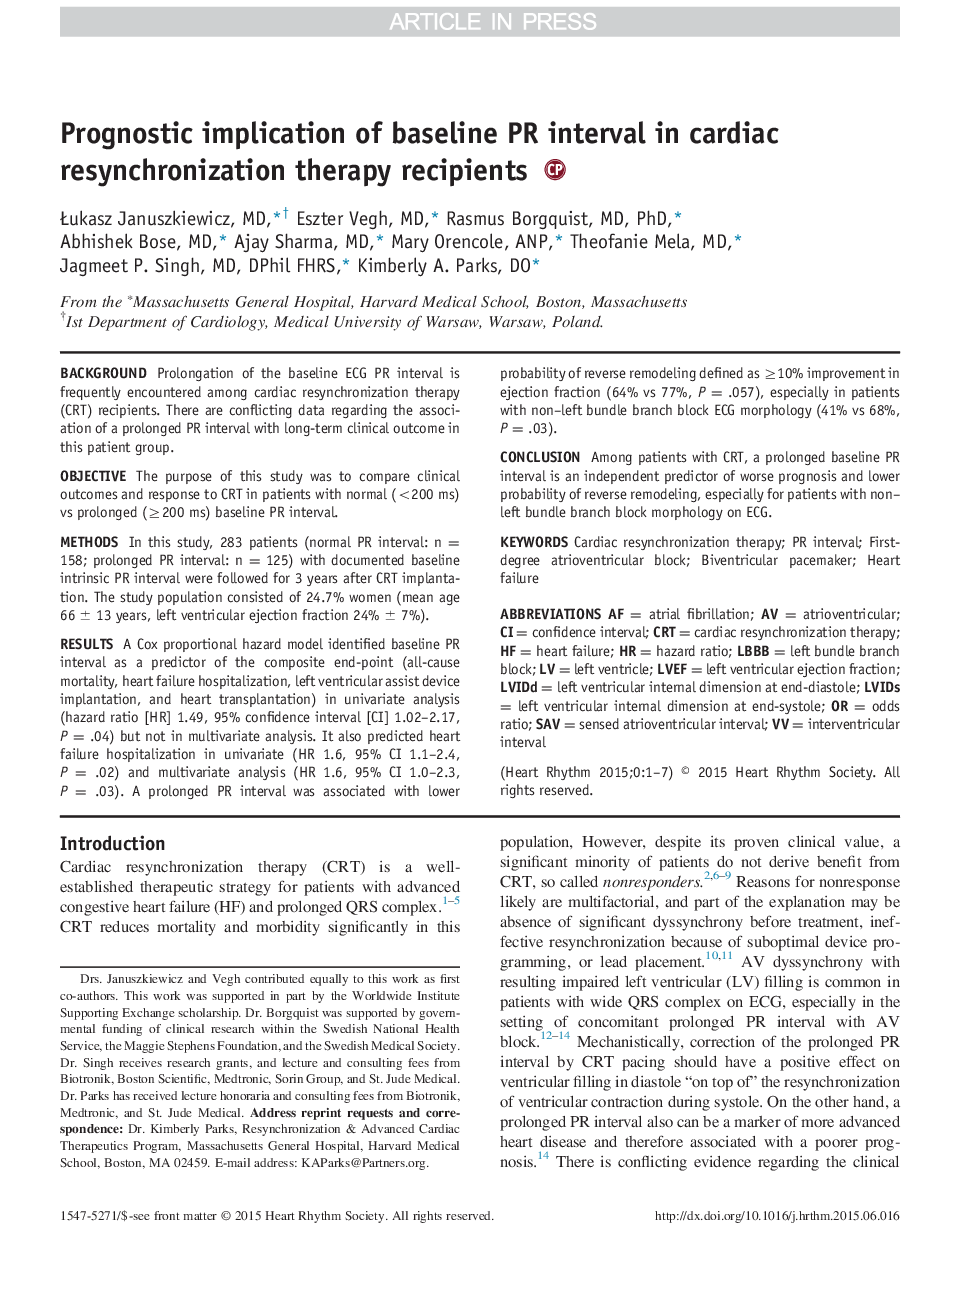 Prognostic implication of baseline PR interval in cardiac resynchronization therapy recipients